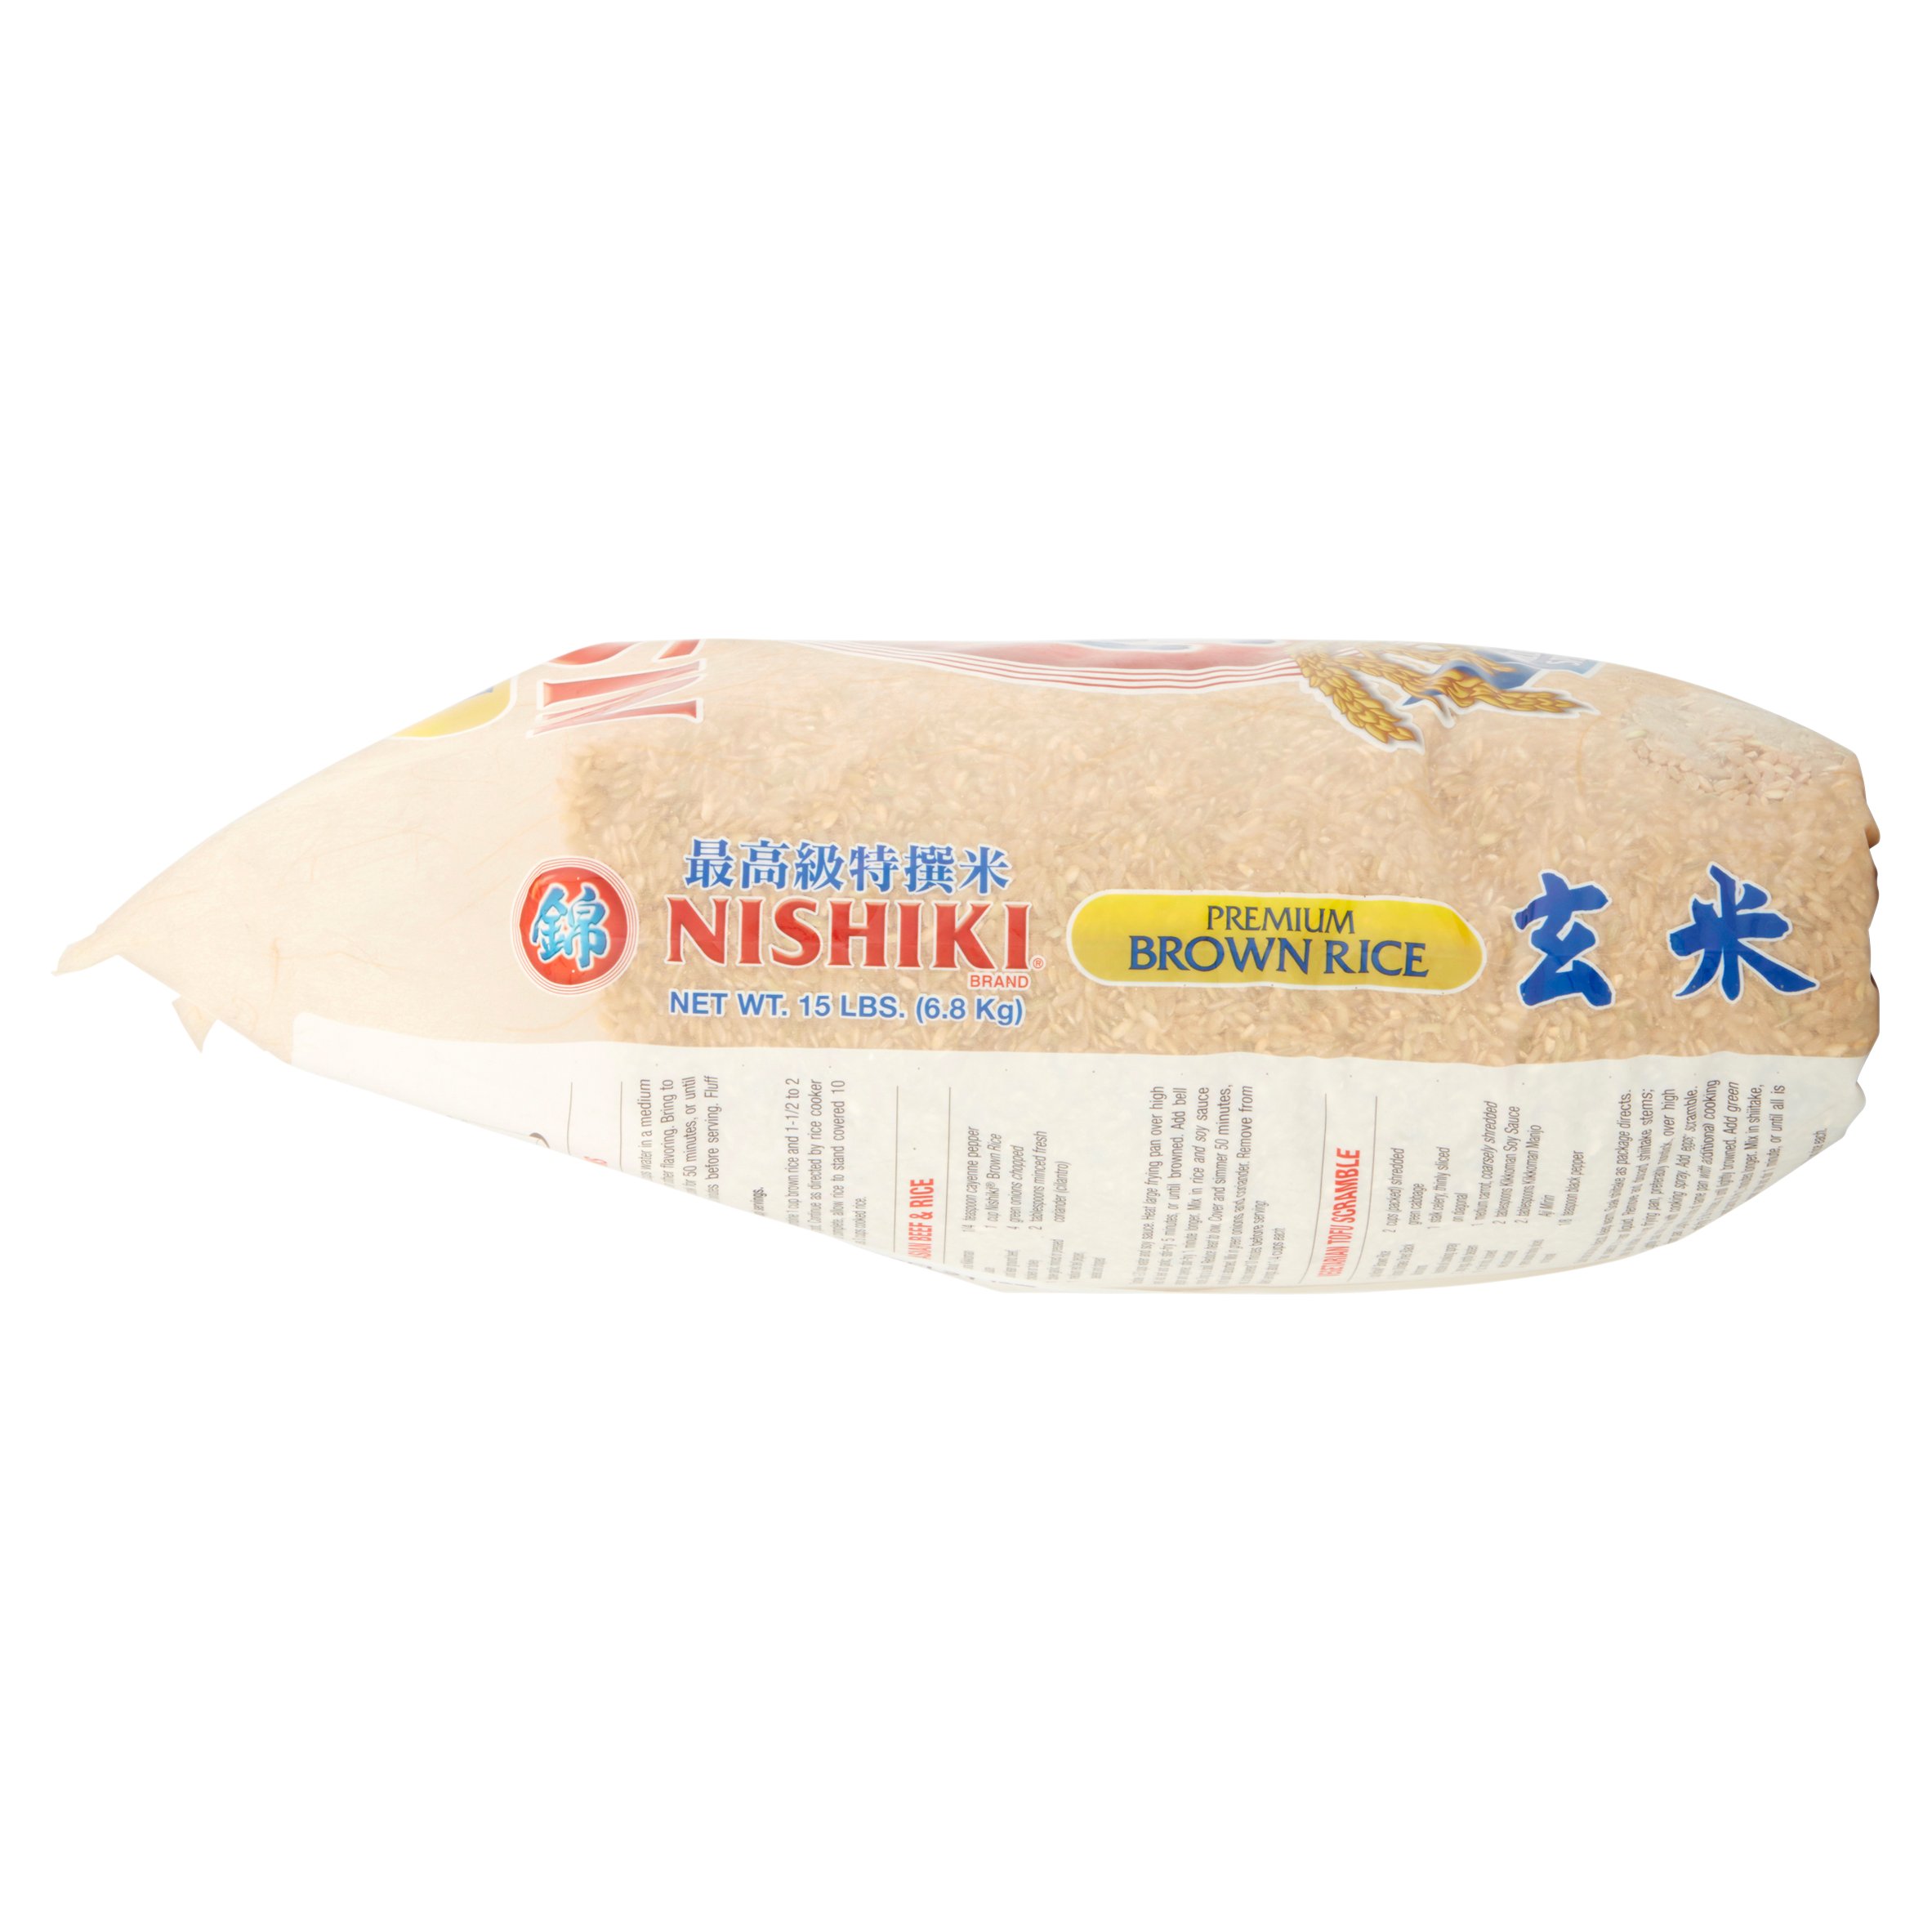 Nishiki Premium Brown Rice, 15 lb - image 3 of 5